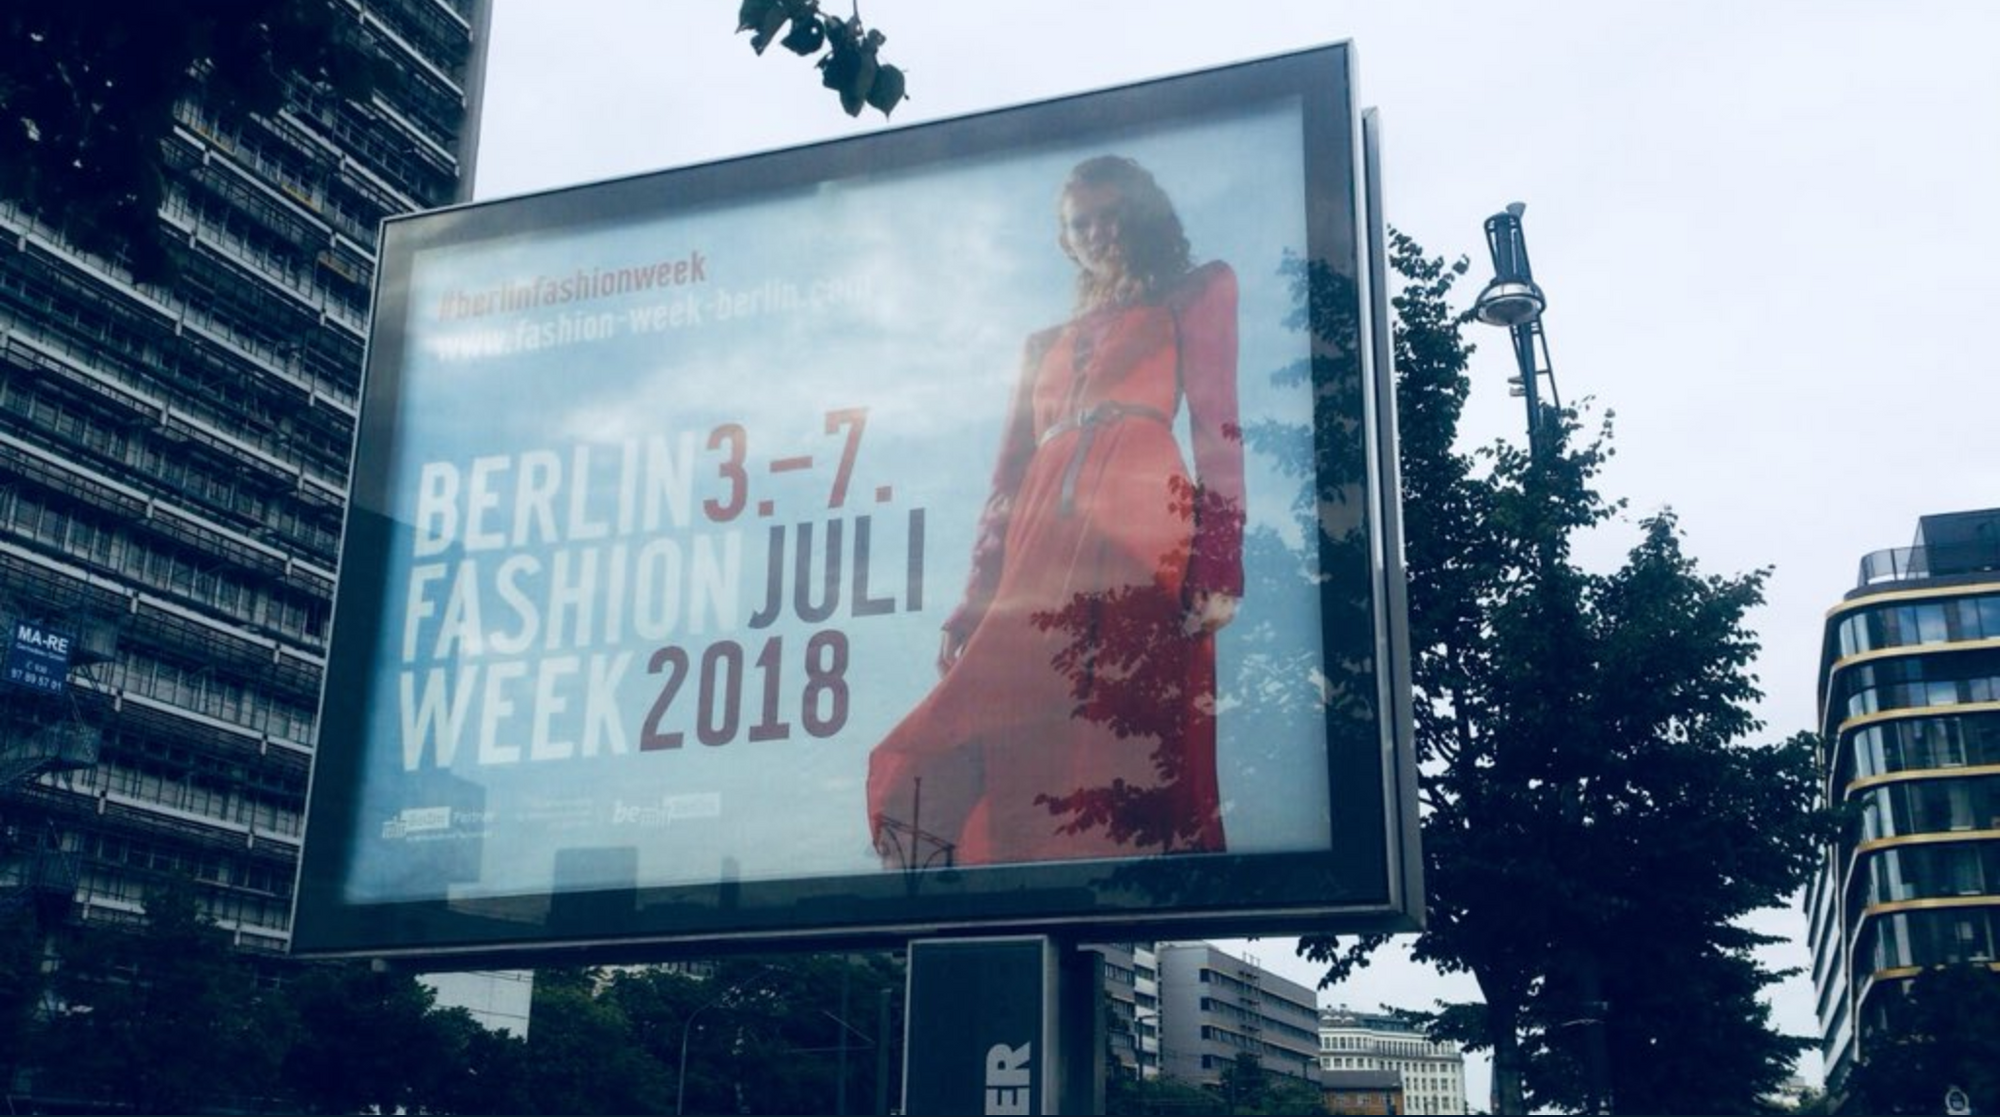 Designers tips for Berlin Fashion week - TAUKO - Taukodesign